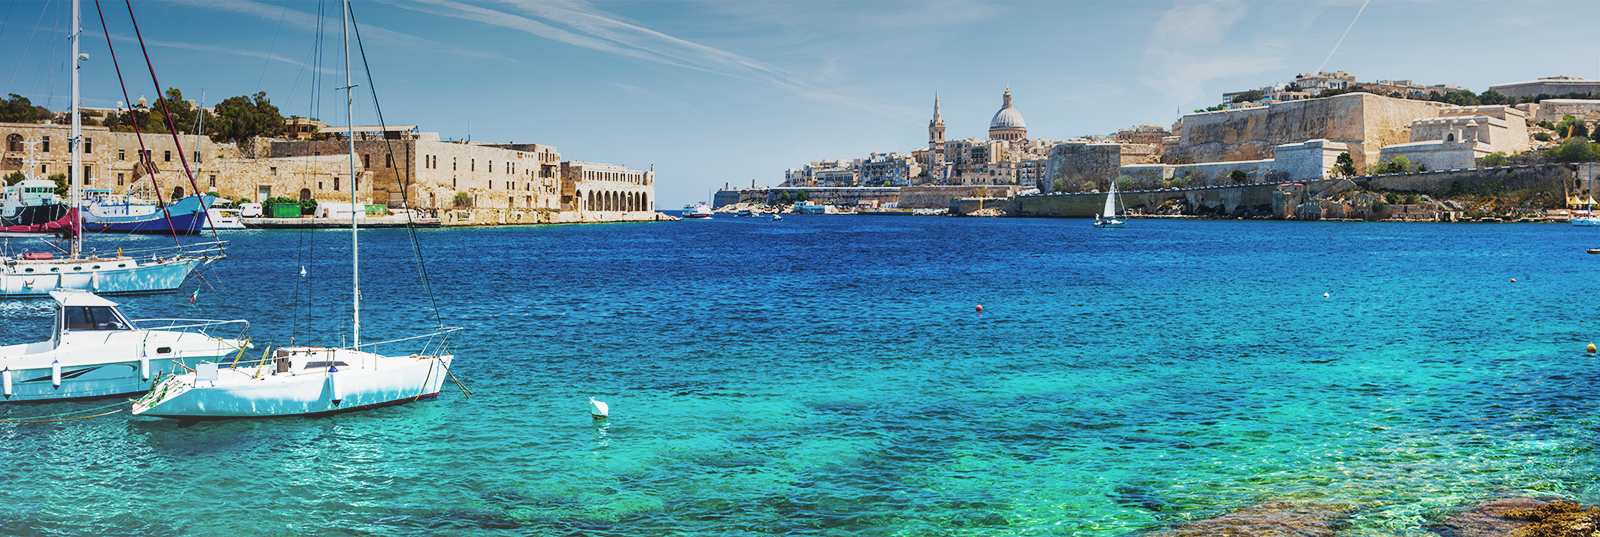 Guía turística de Malte